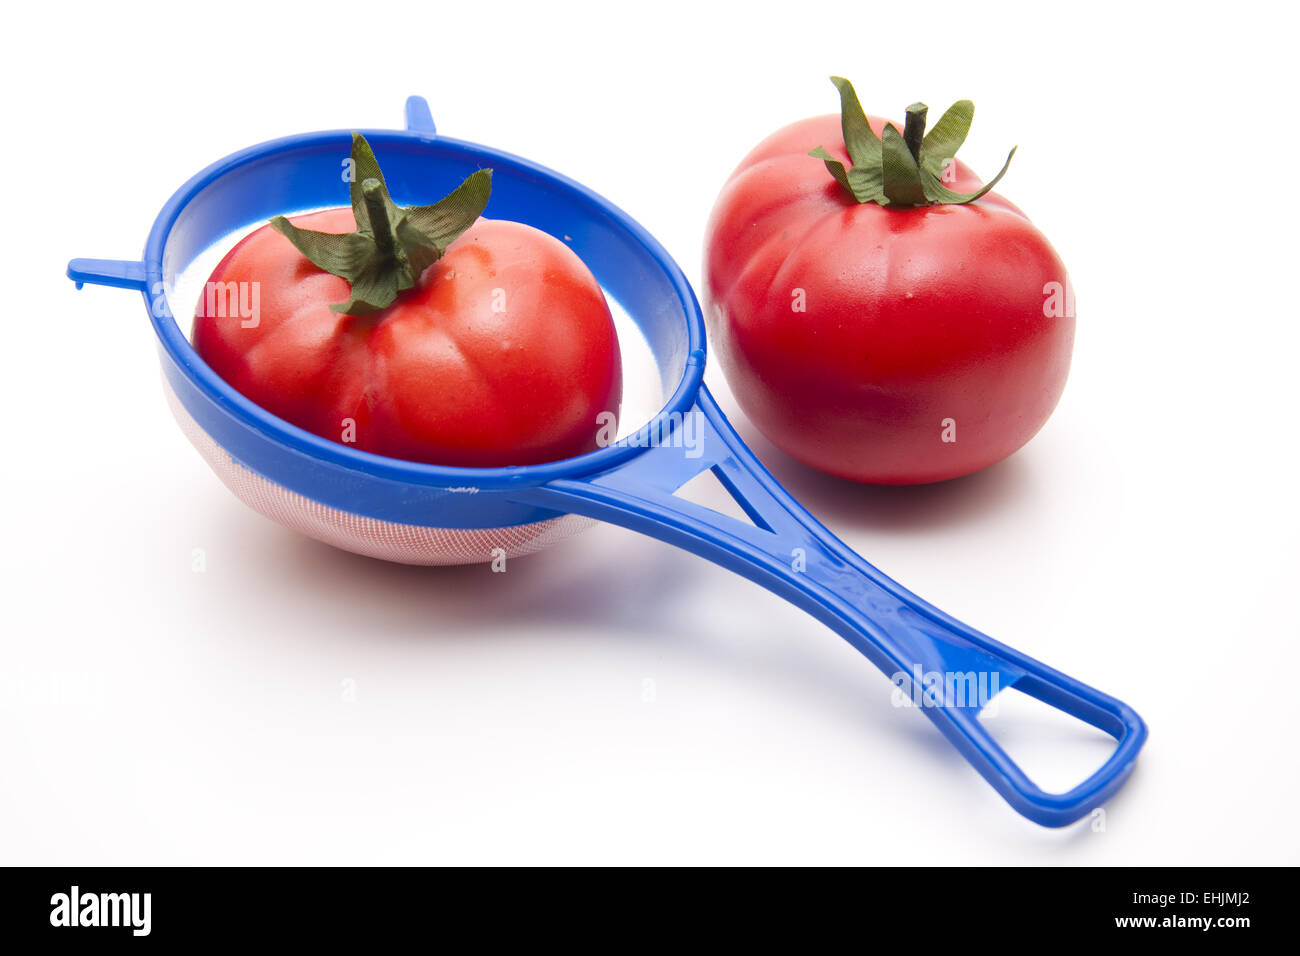 Tomato in the sieve Stock Photo